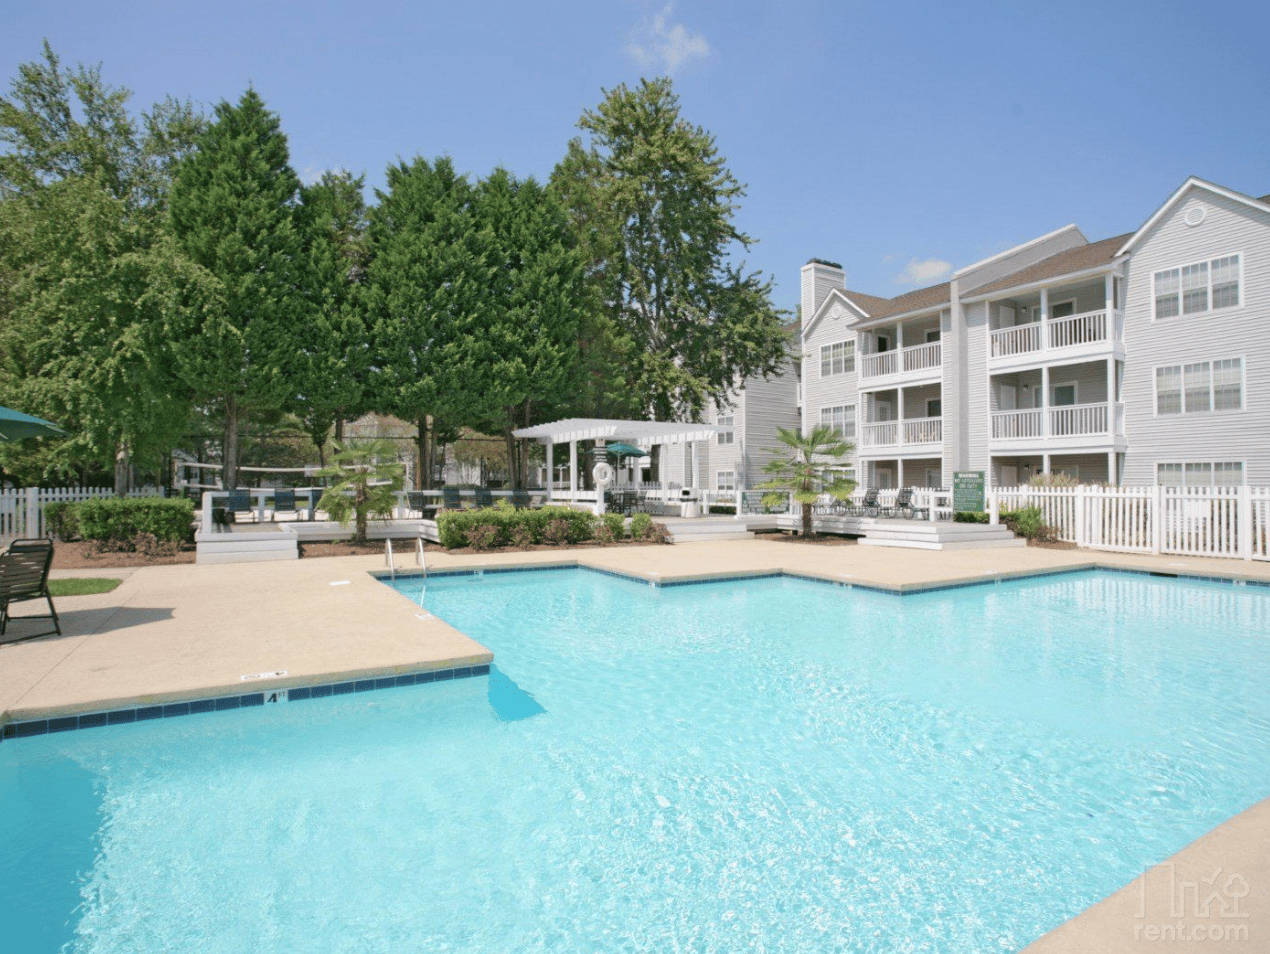 The RADCO Companies Acquires The Oak Pointe Apartments in Charlotte, North Carolina